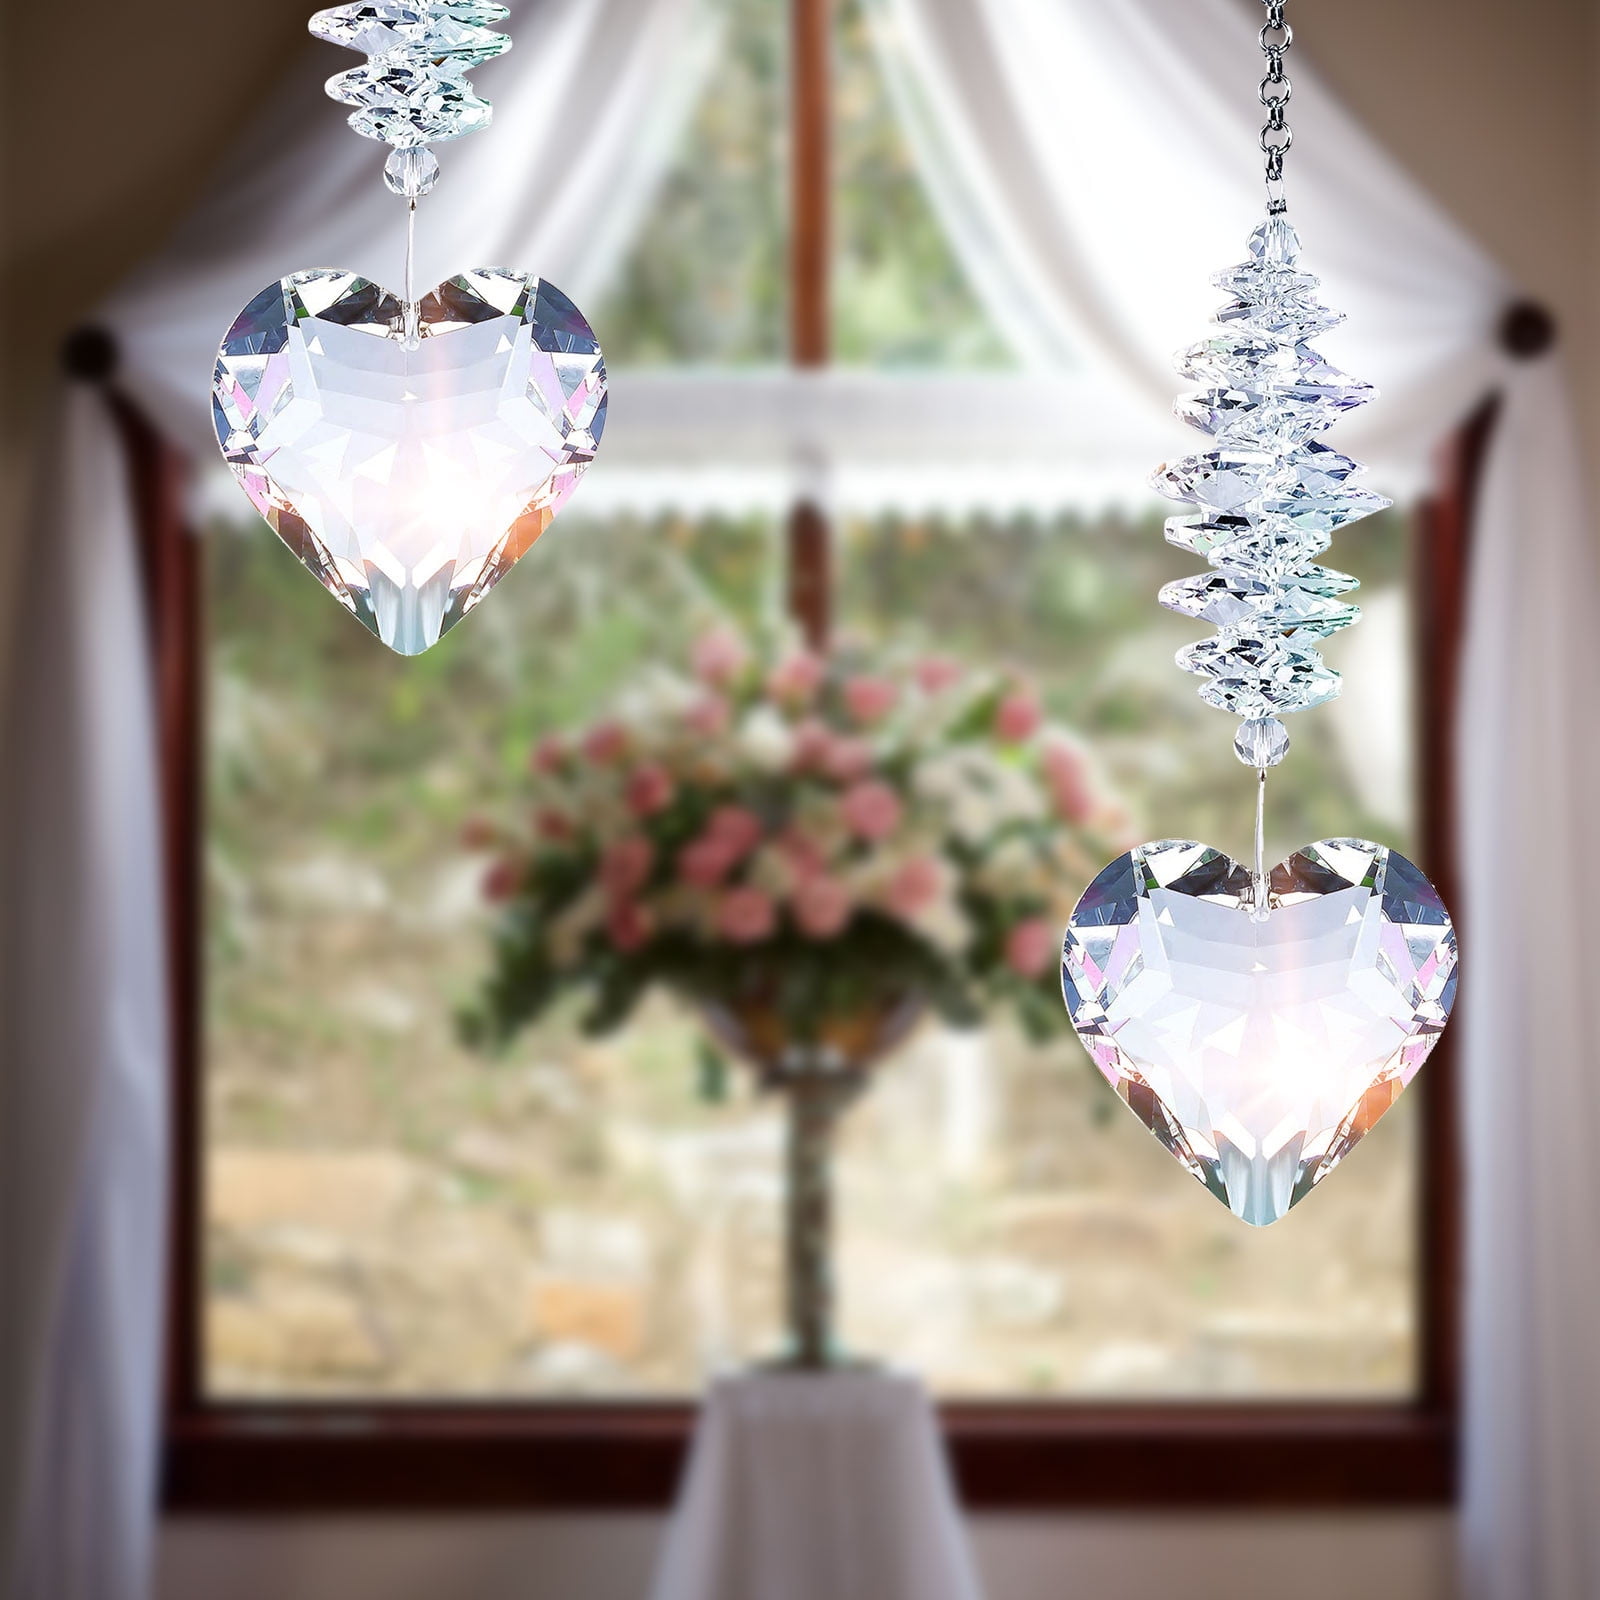 1 x suncatcher mobile lead crystal glass beads outdoor garden home decor cluster 